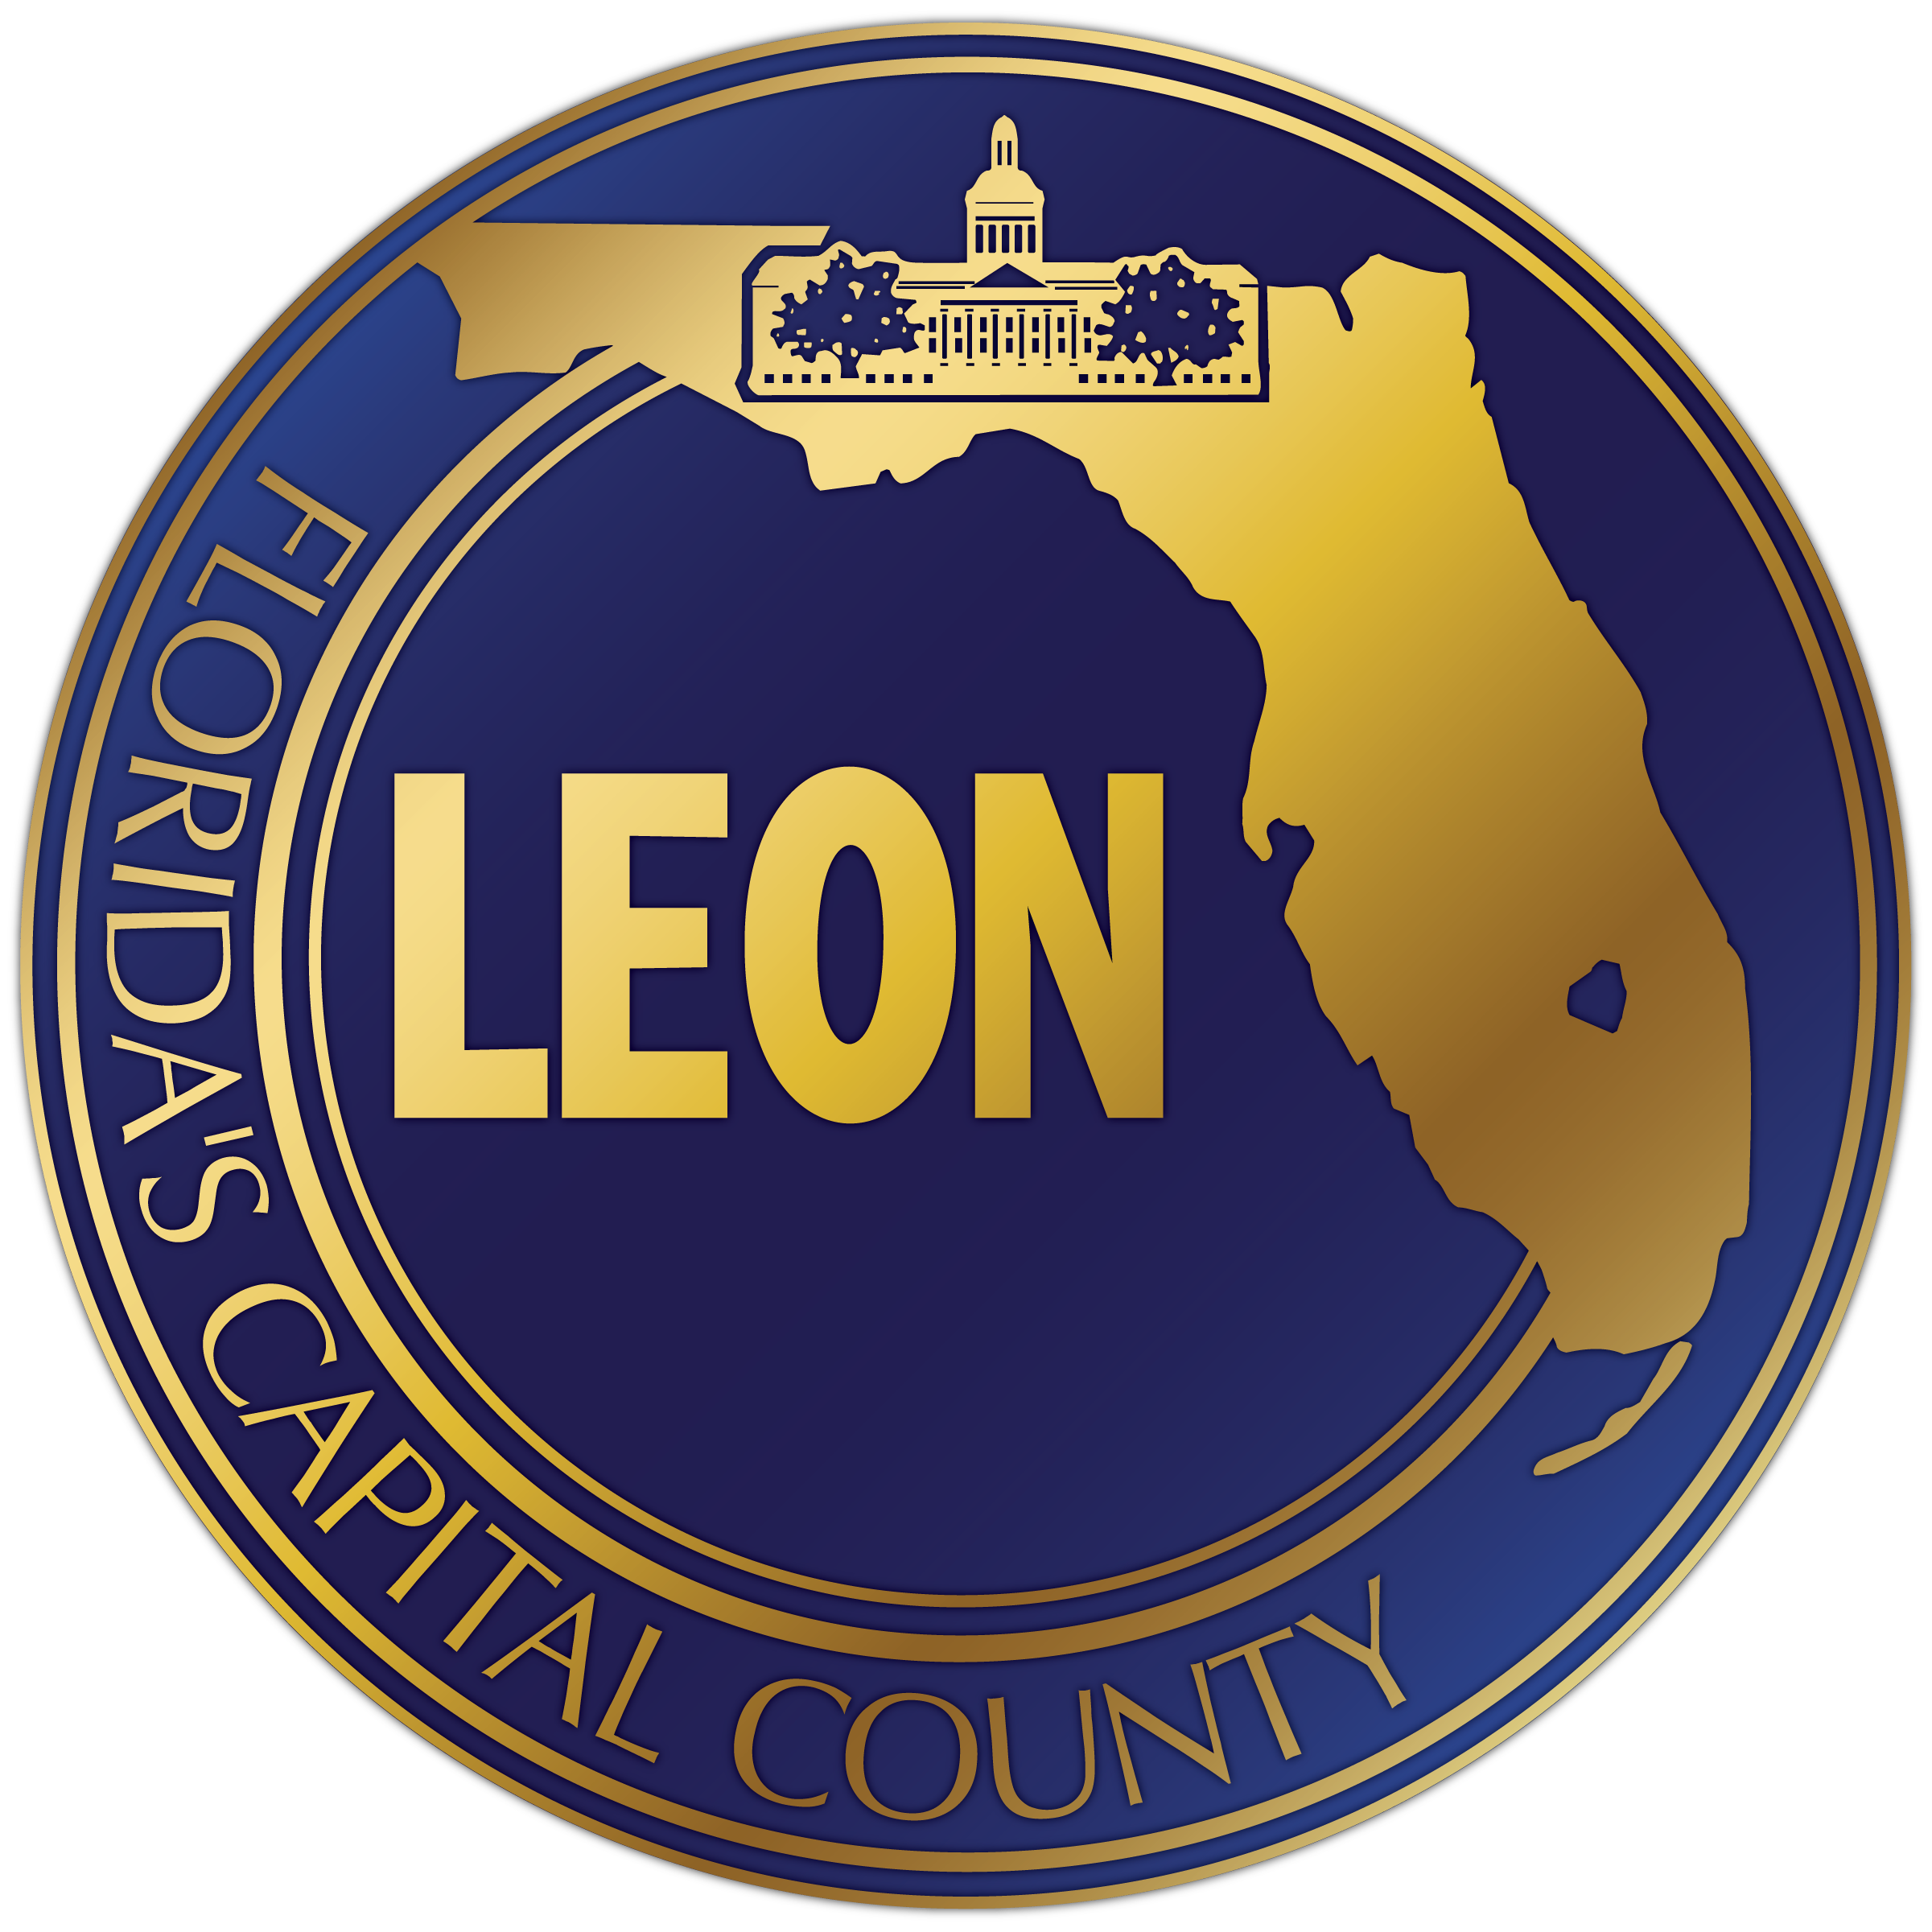 Leon county logo